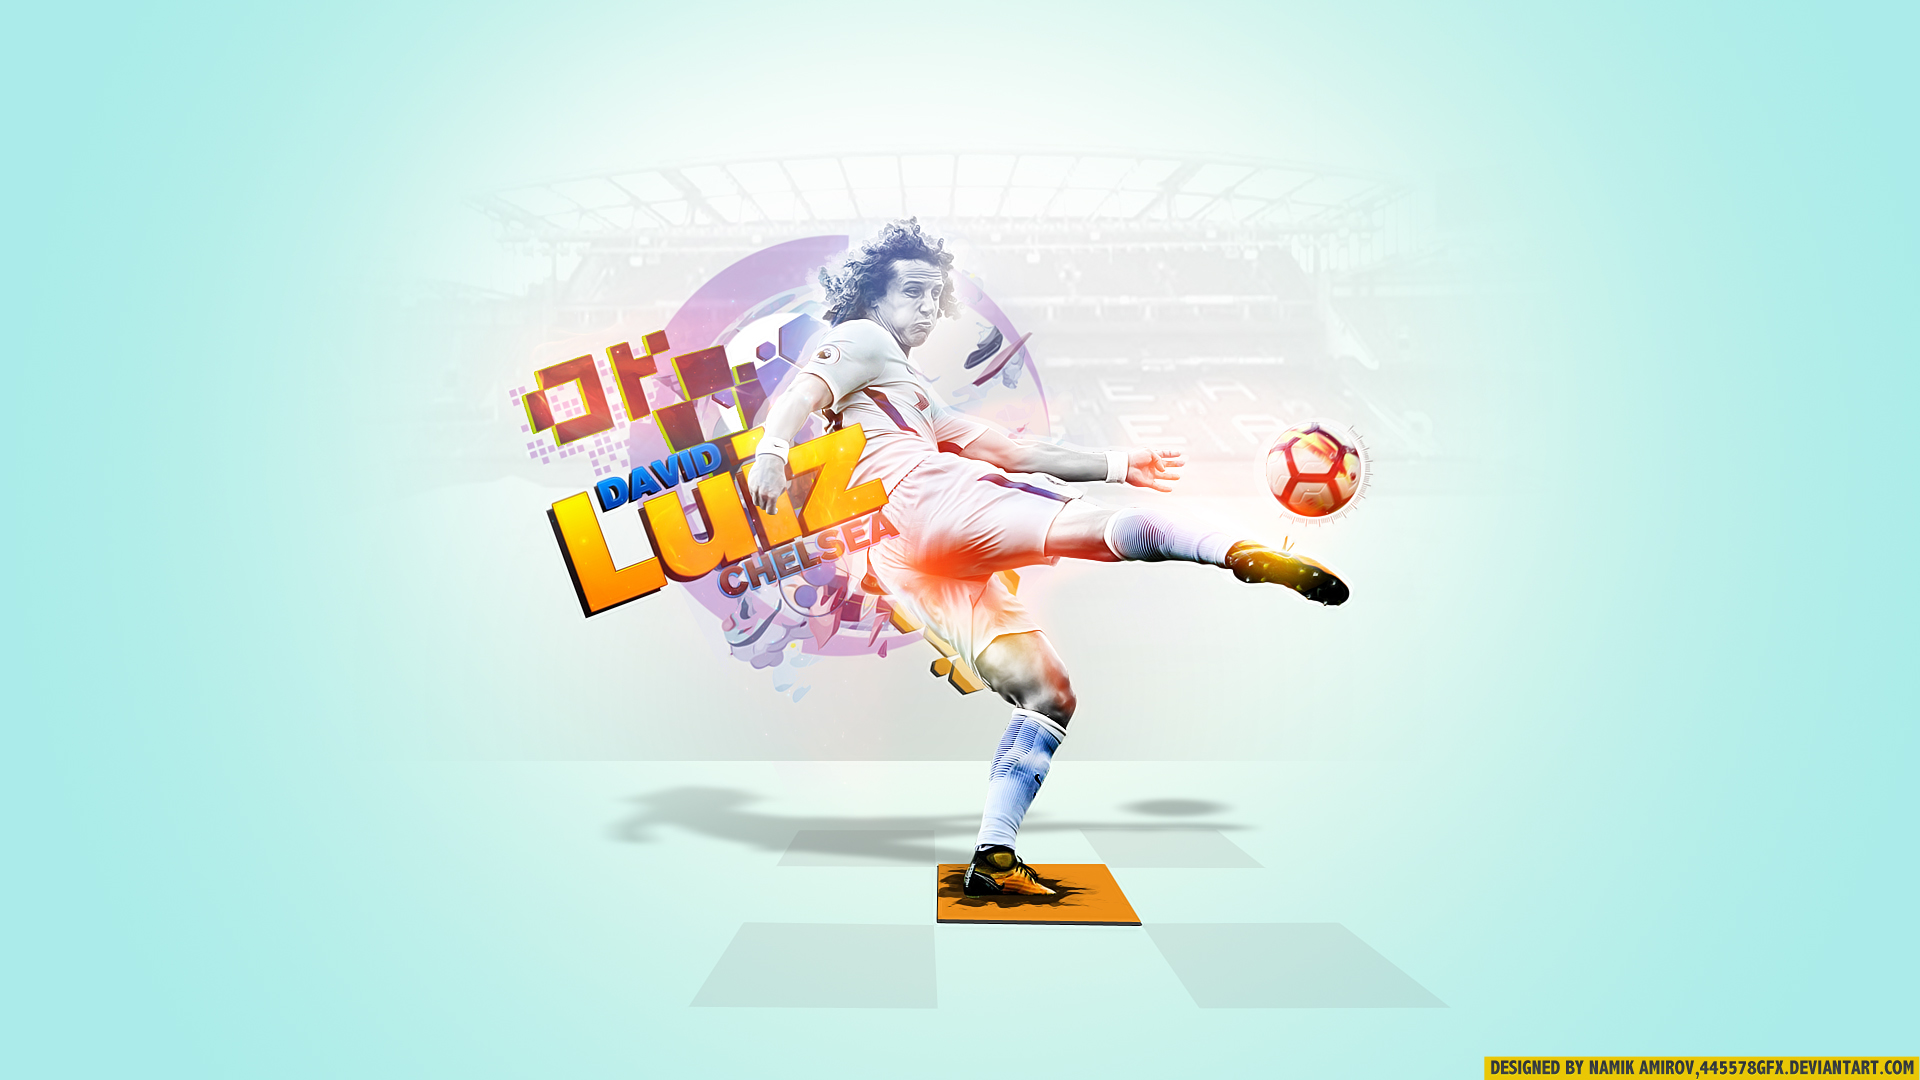 Update on David Luiz | News | Arsenal.com